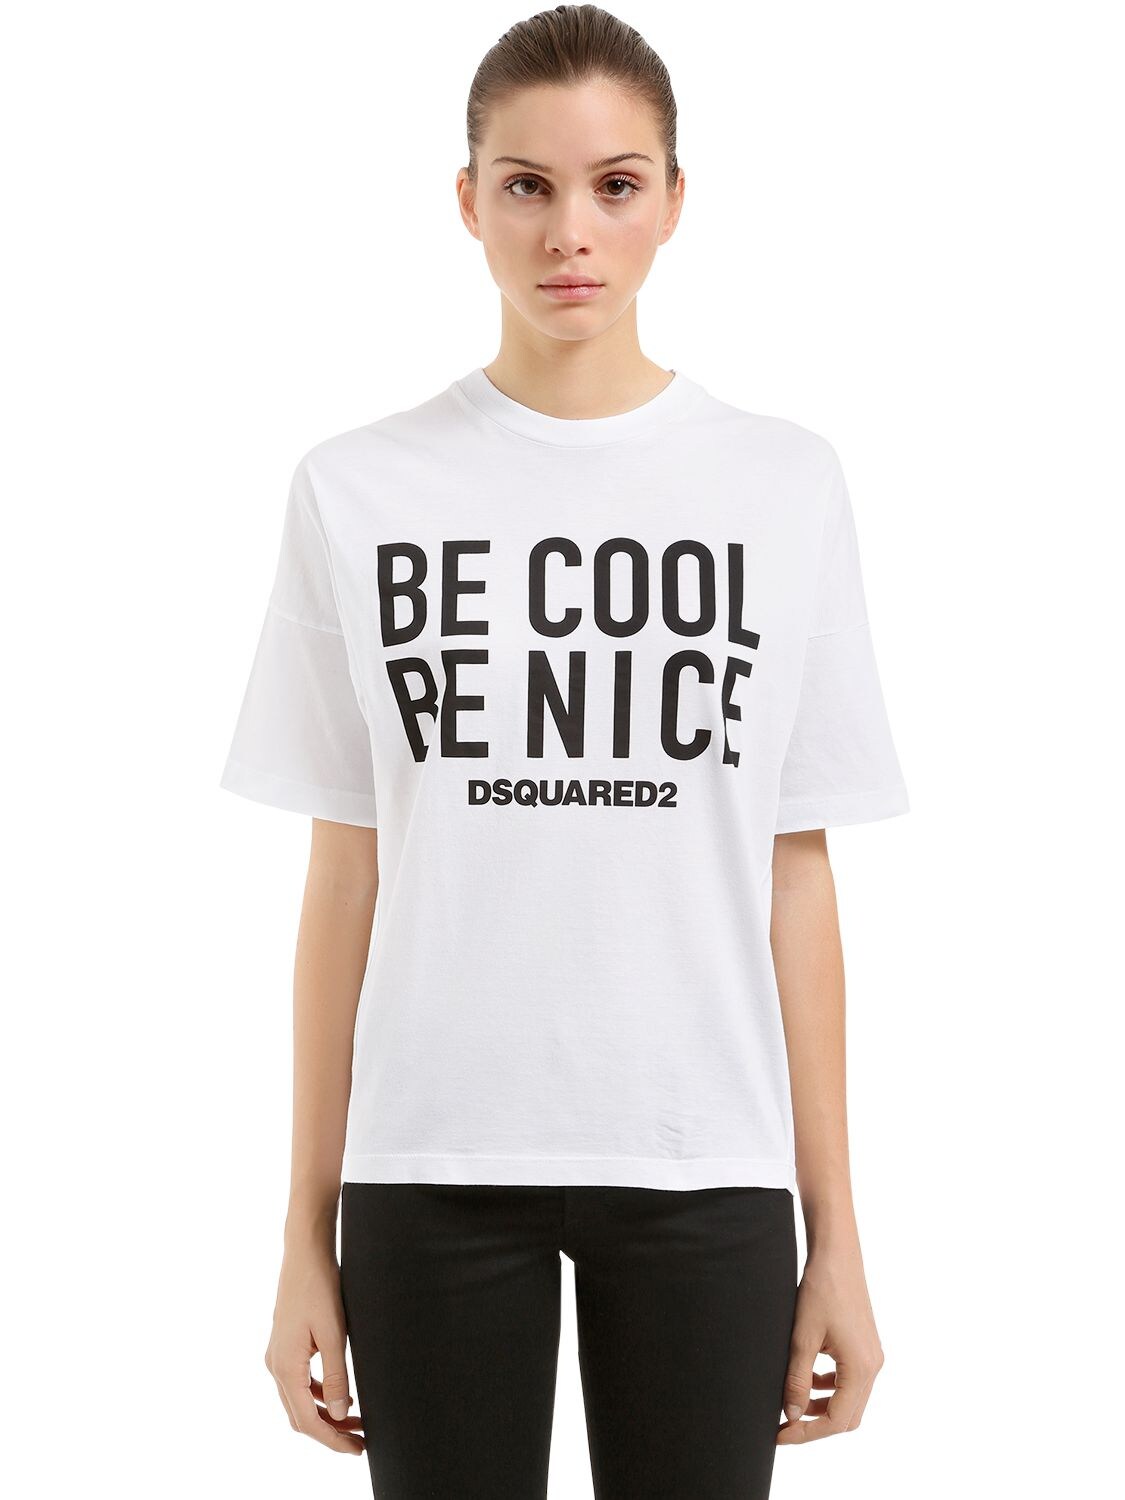 DSQUARED2 "BE COOL BE NICE"织棉T恤,67I5L9003-OTYzWA2